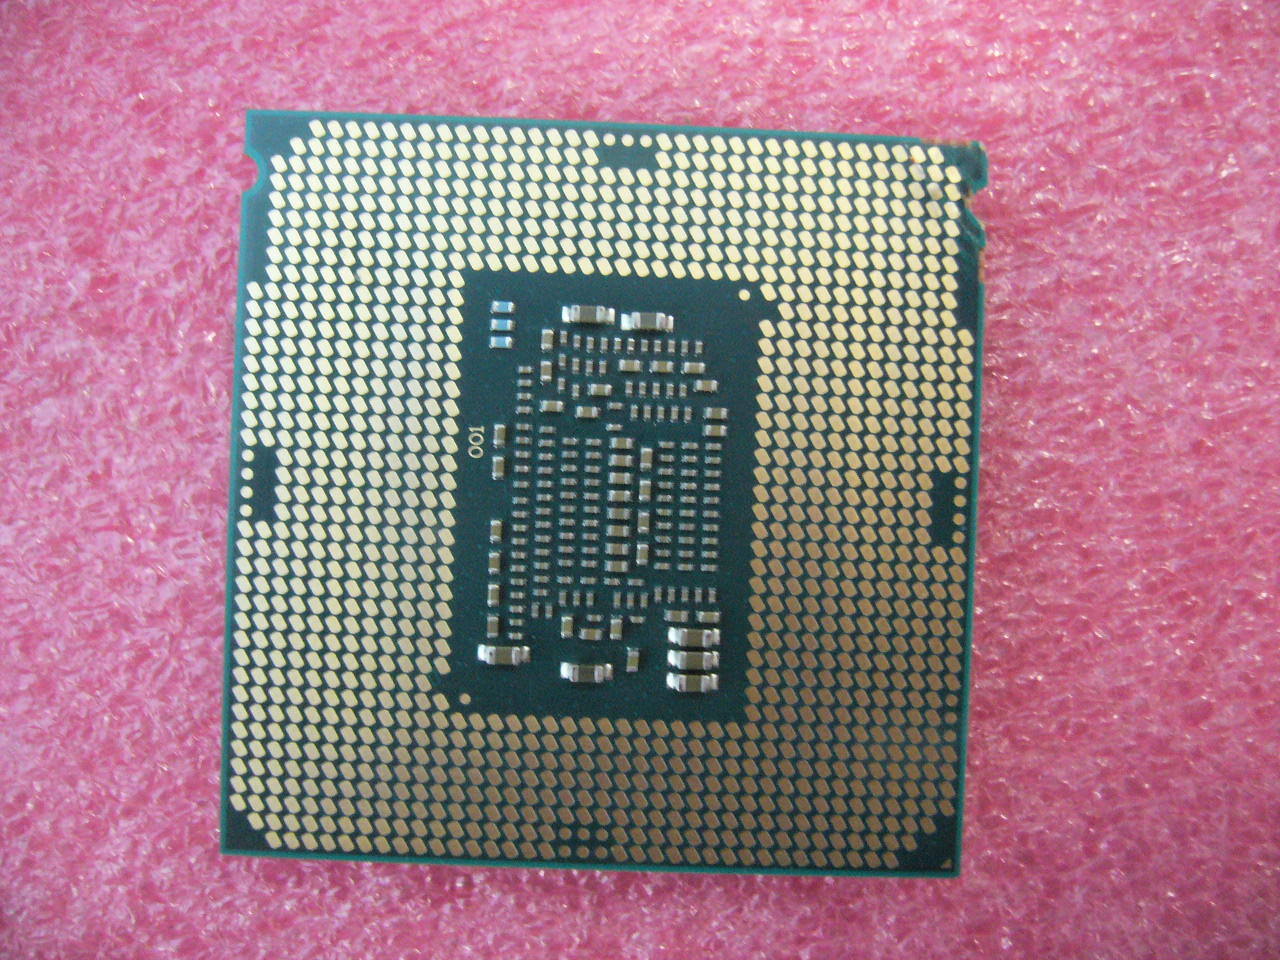 QTY 1x Intel CPU i7-7700 Quad-Cores 3.6Ghz 8MB LGA1151 SR338 NOT WORKING - Click Image to Close